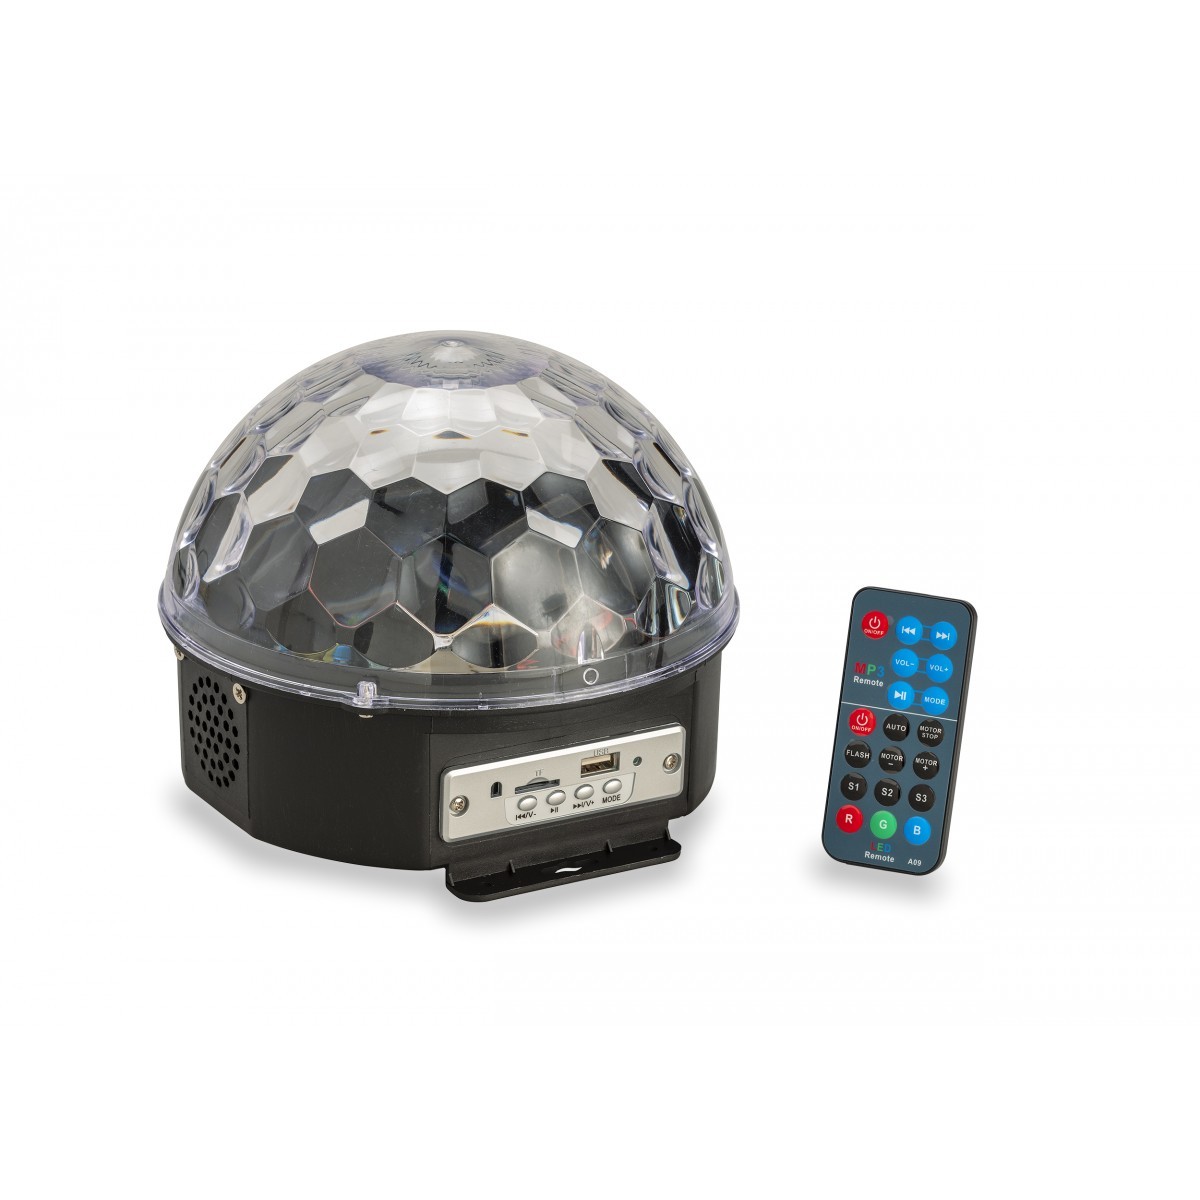 CRYSTAL BALL SOUNDSATION CB-630B 6X3W LED RGB BT